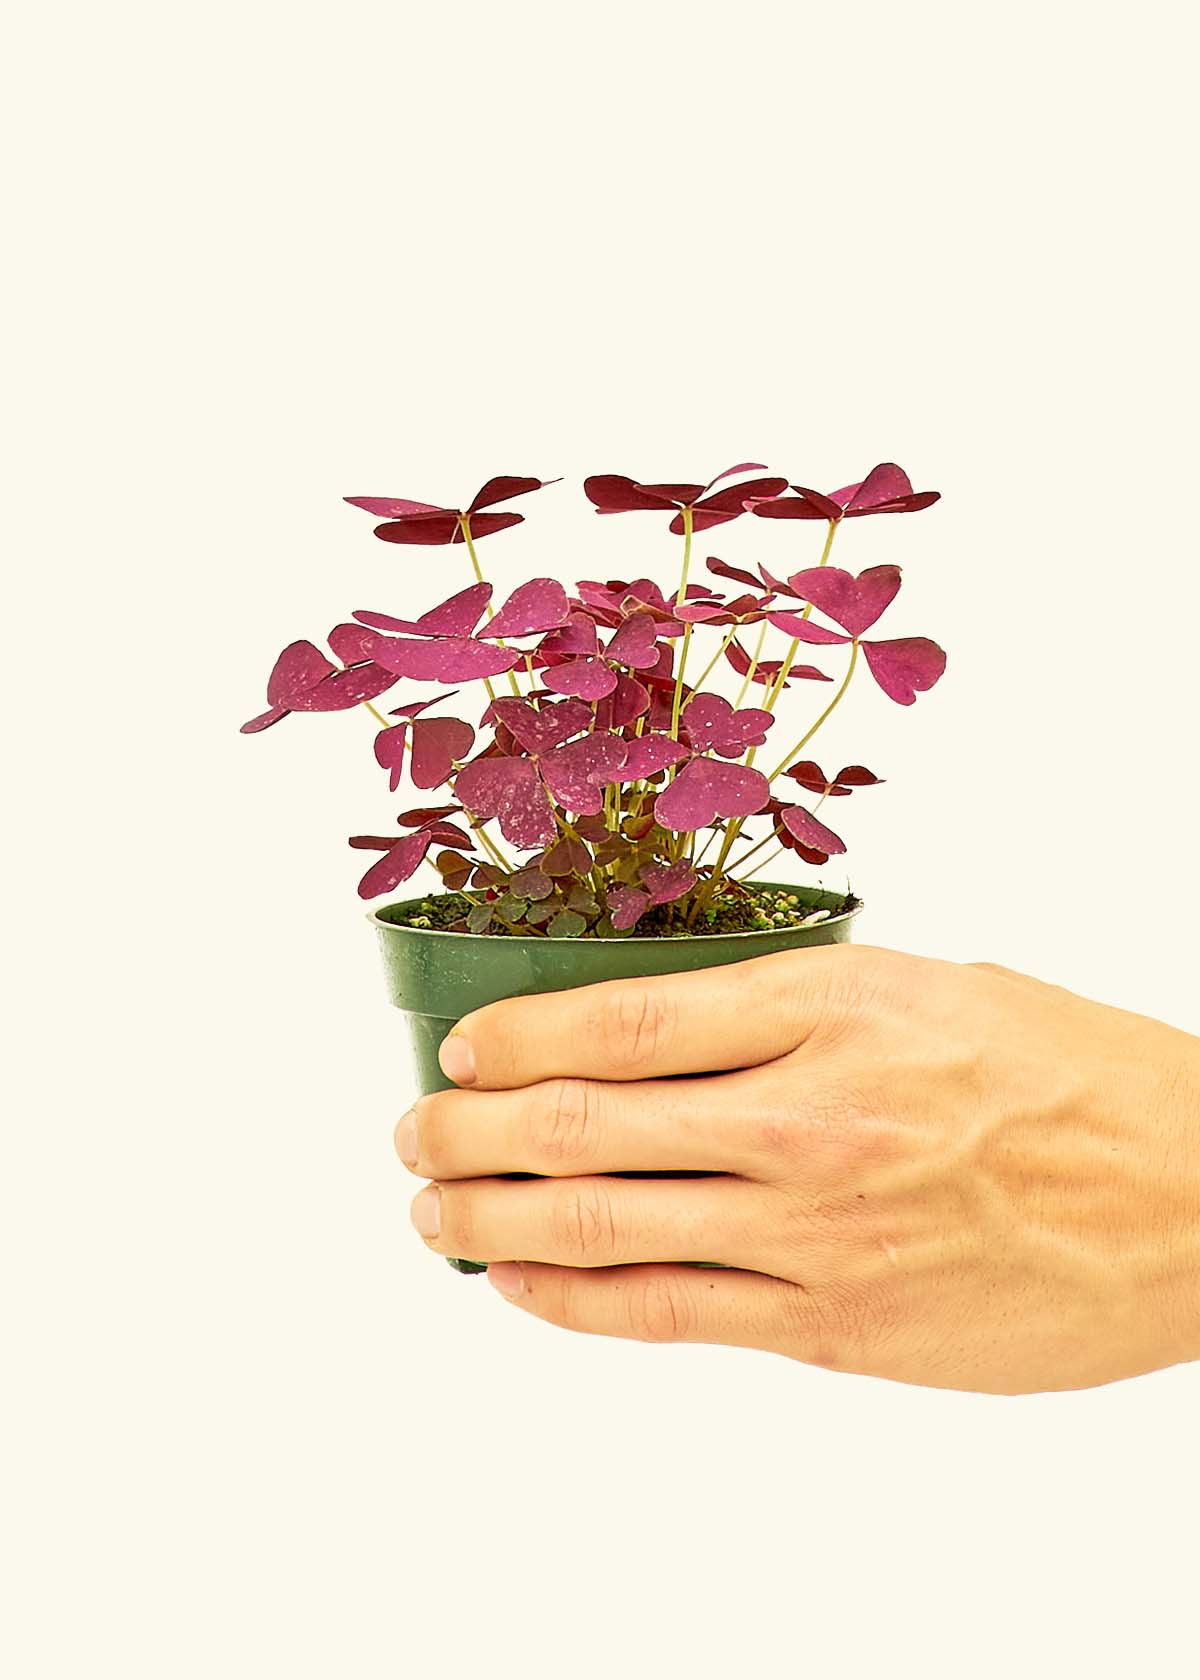 Small Purple Shamrock (Oxalis vairety) in a grow pot.